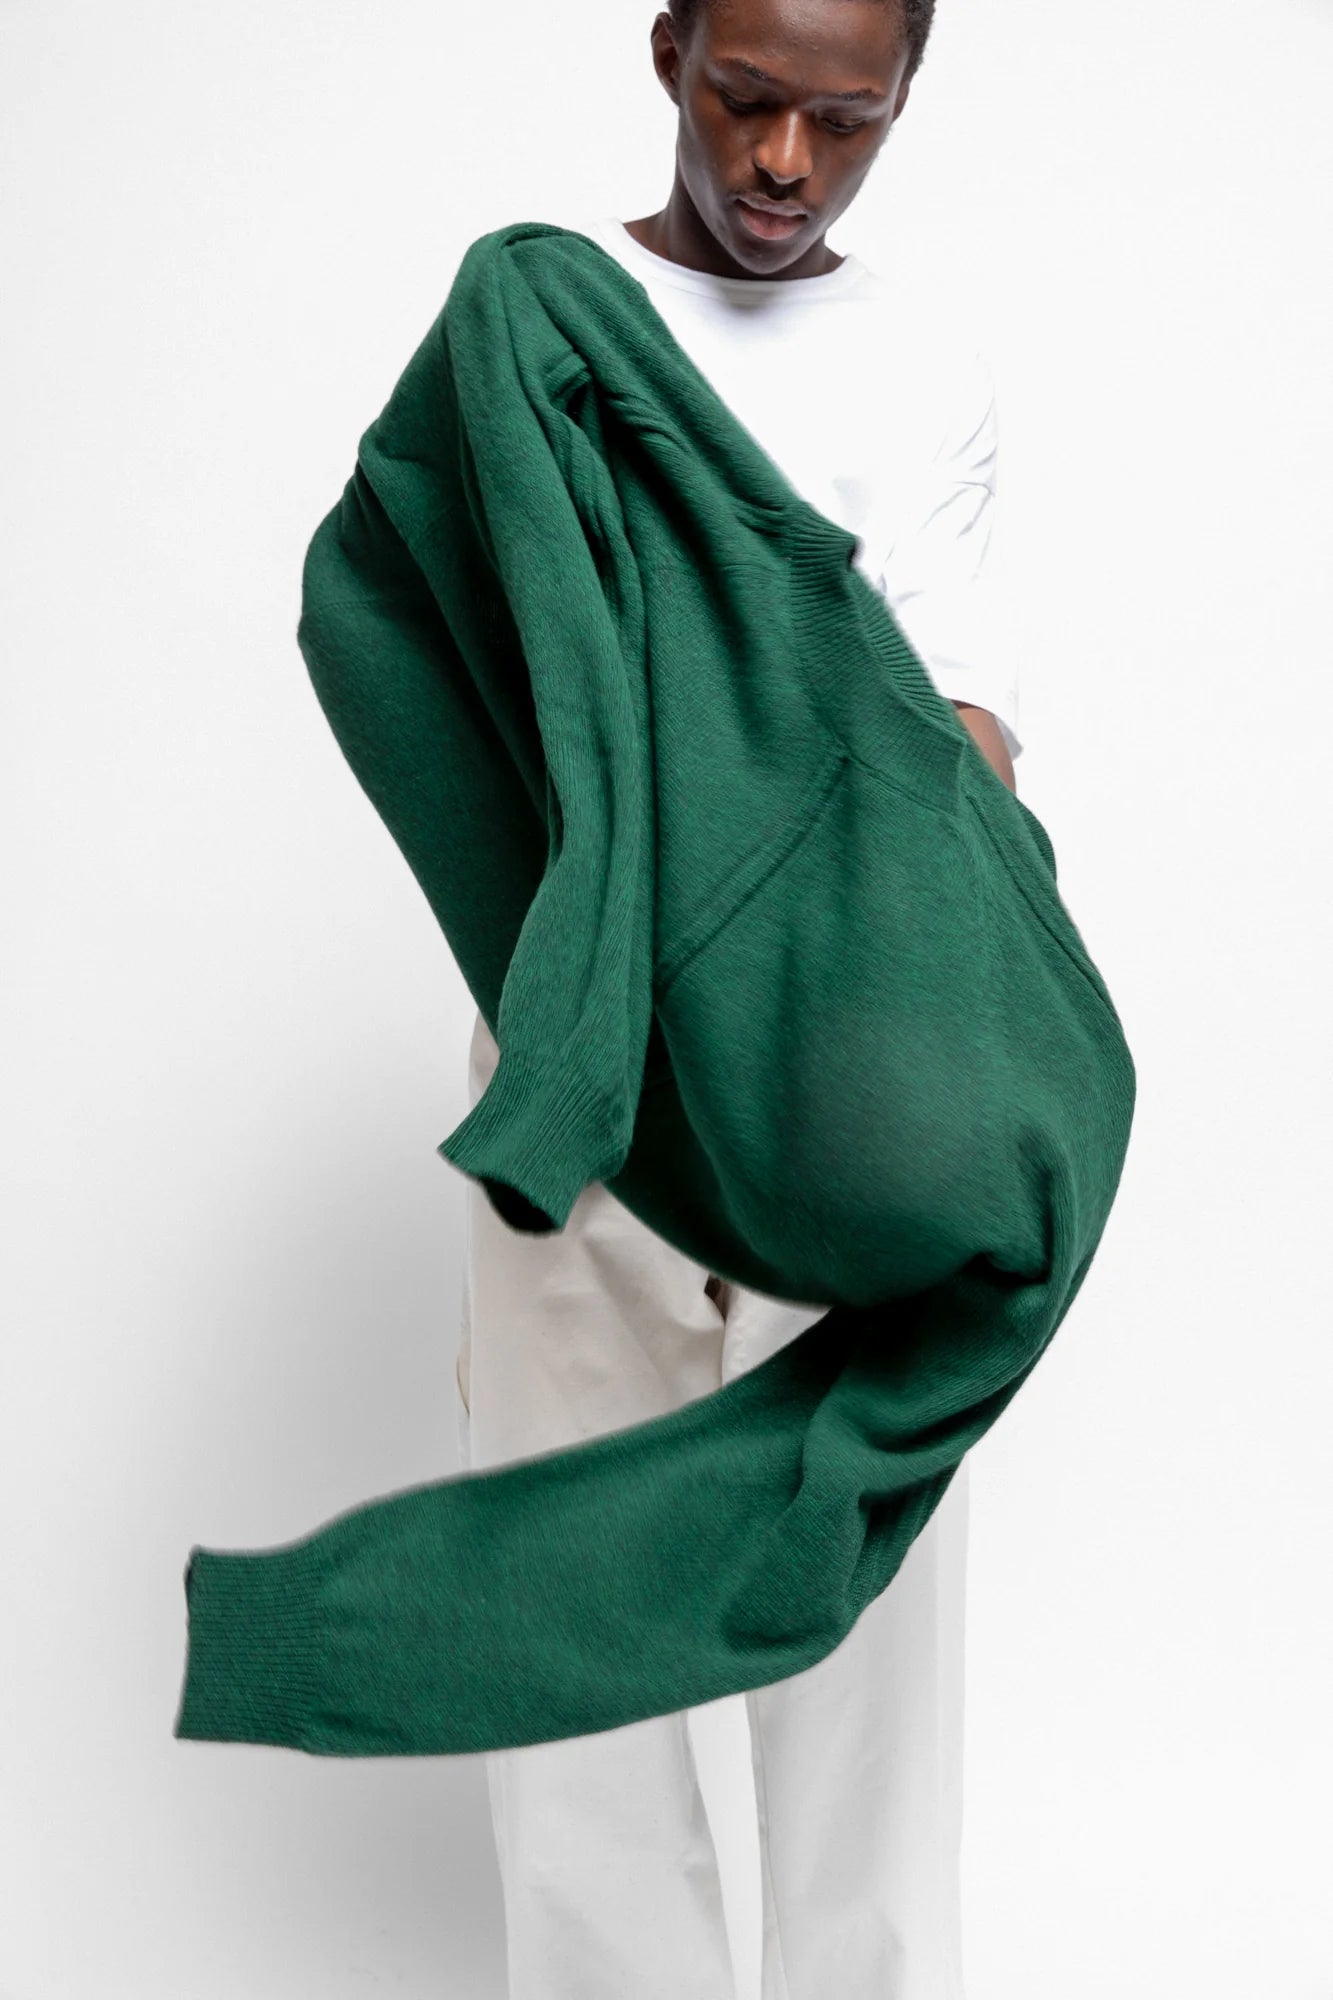 Serge unisex knit in lizzard green